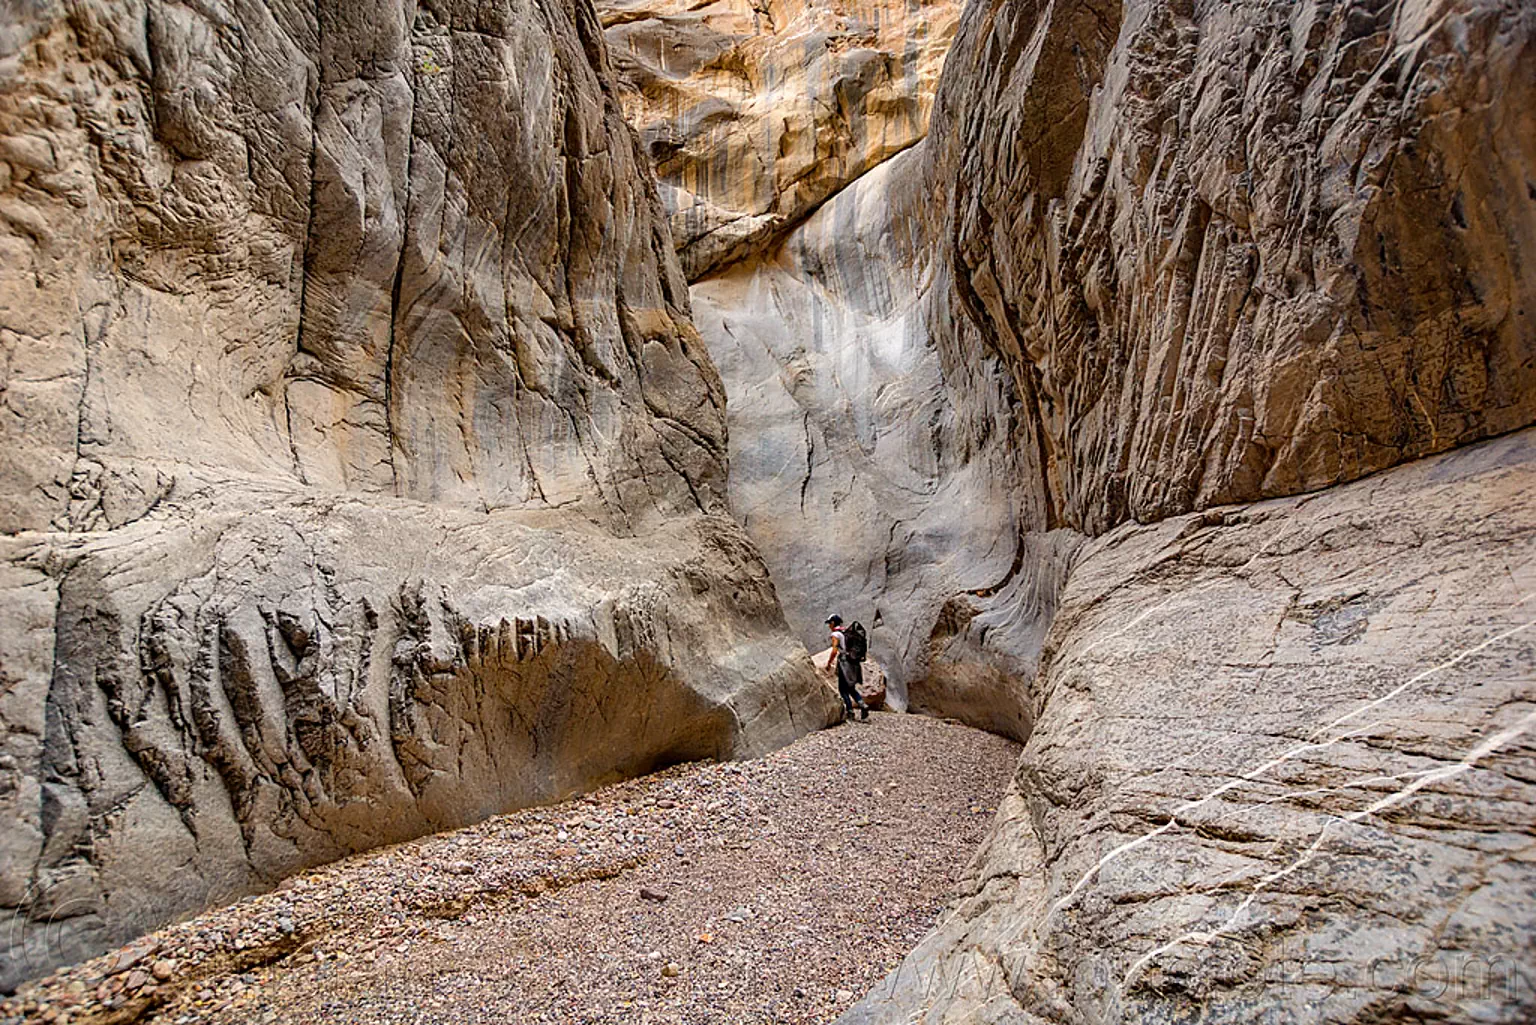 fall canyon - death valley national park (california), death valley, fall canyon, hiking, marble rock, narrows